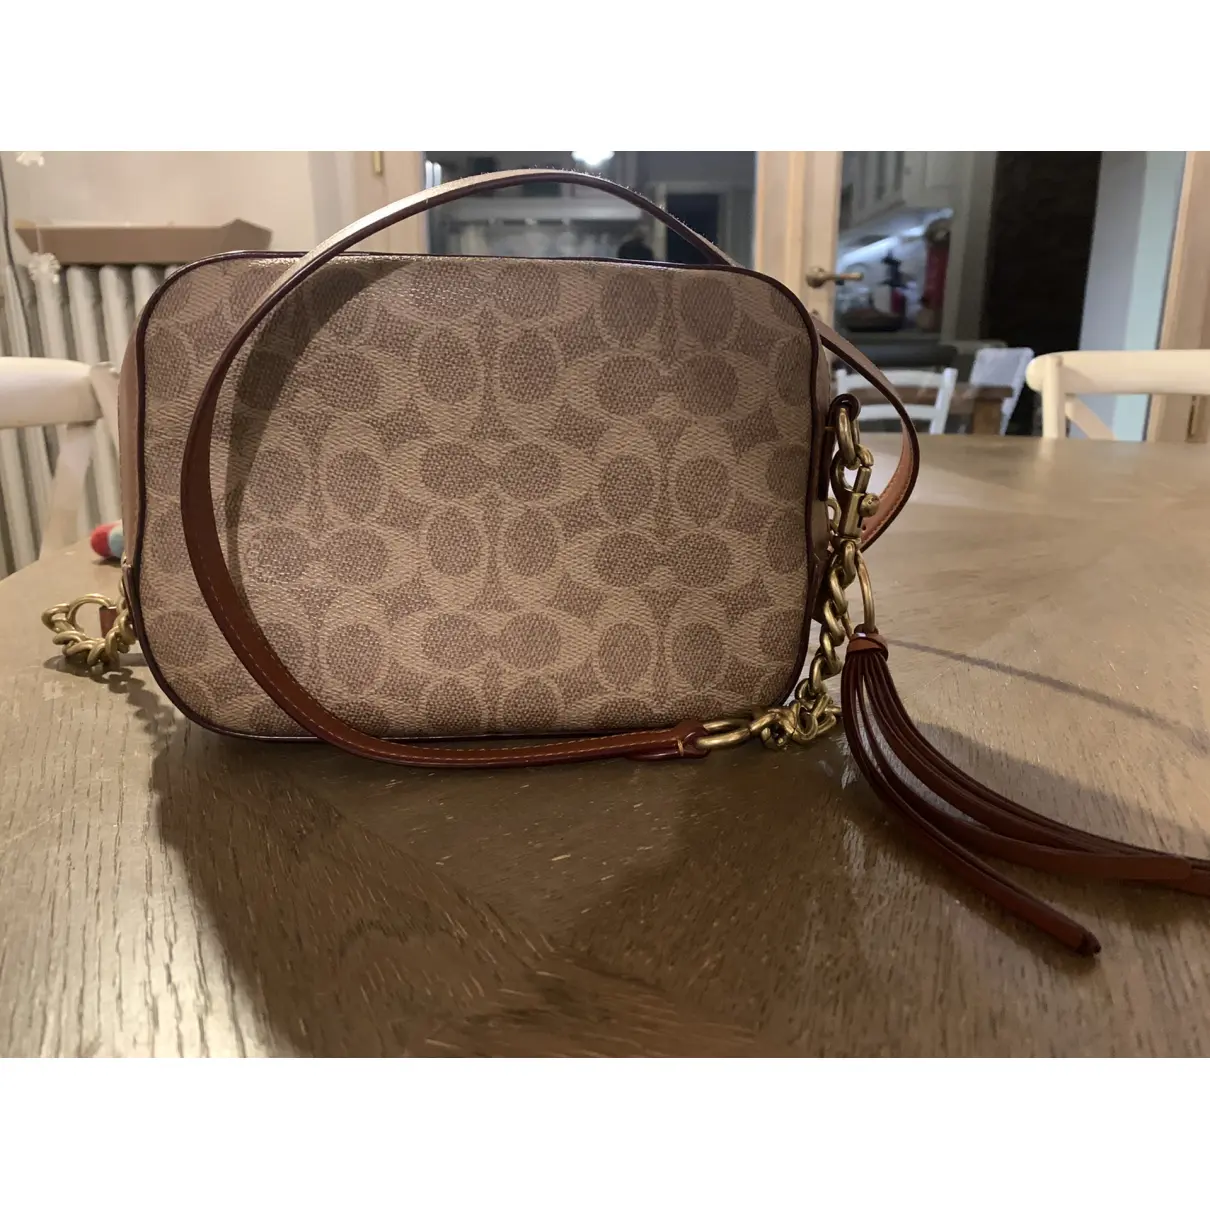 Buy Coach Wristlet nolita 19 leather crossbody bag online